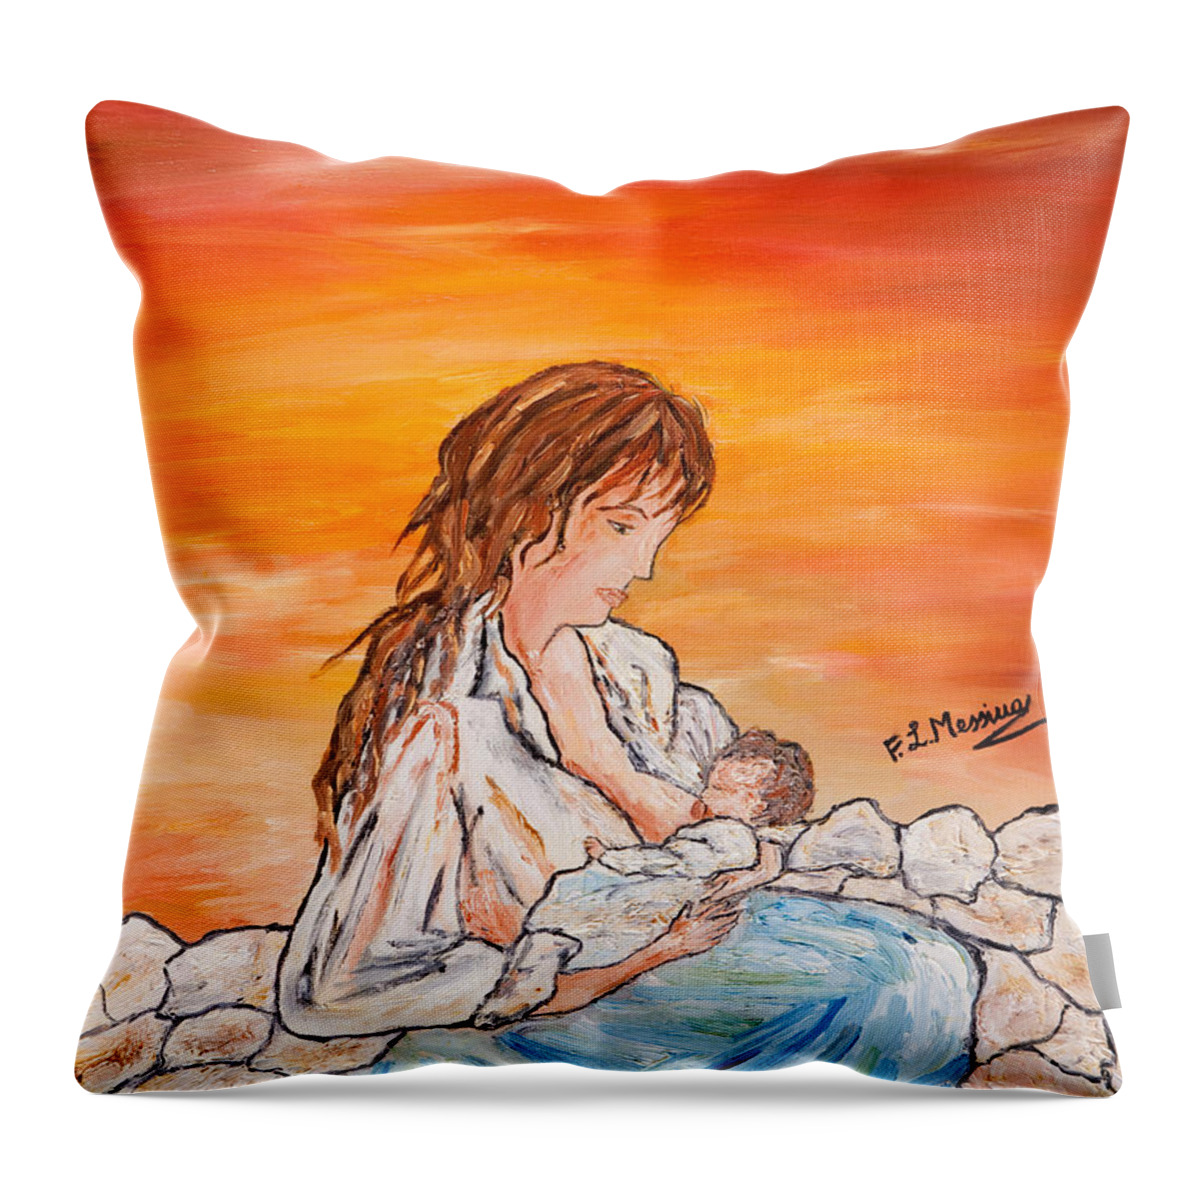 Loredana Messina Throw Pillow featuring the painting Legame continuo by Loredana Messina